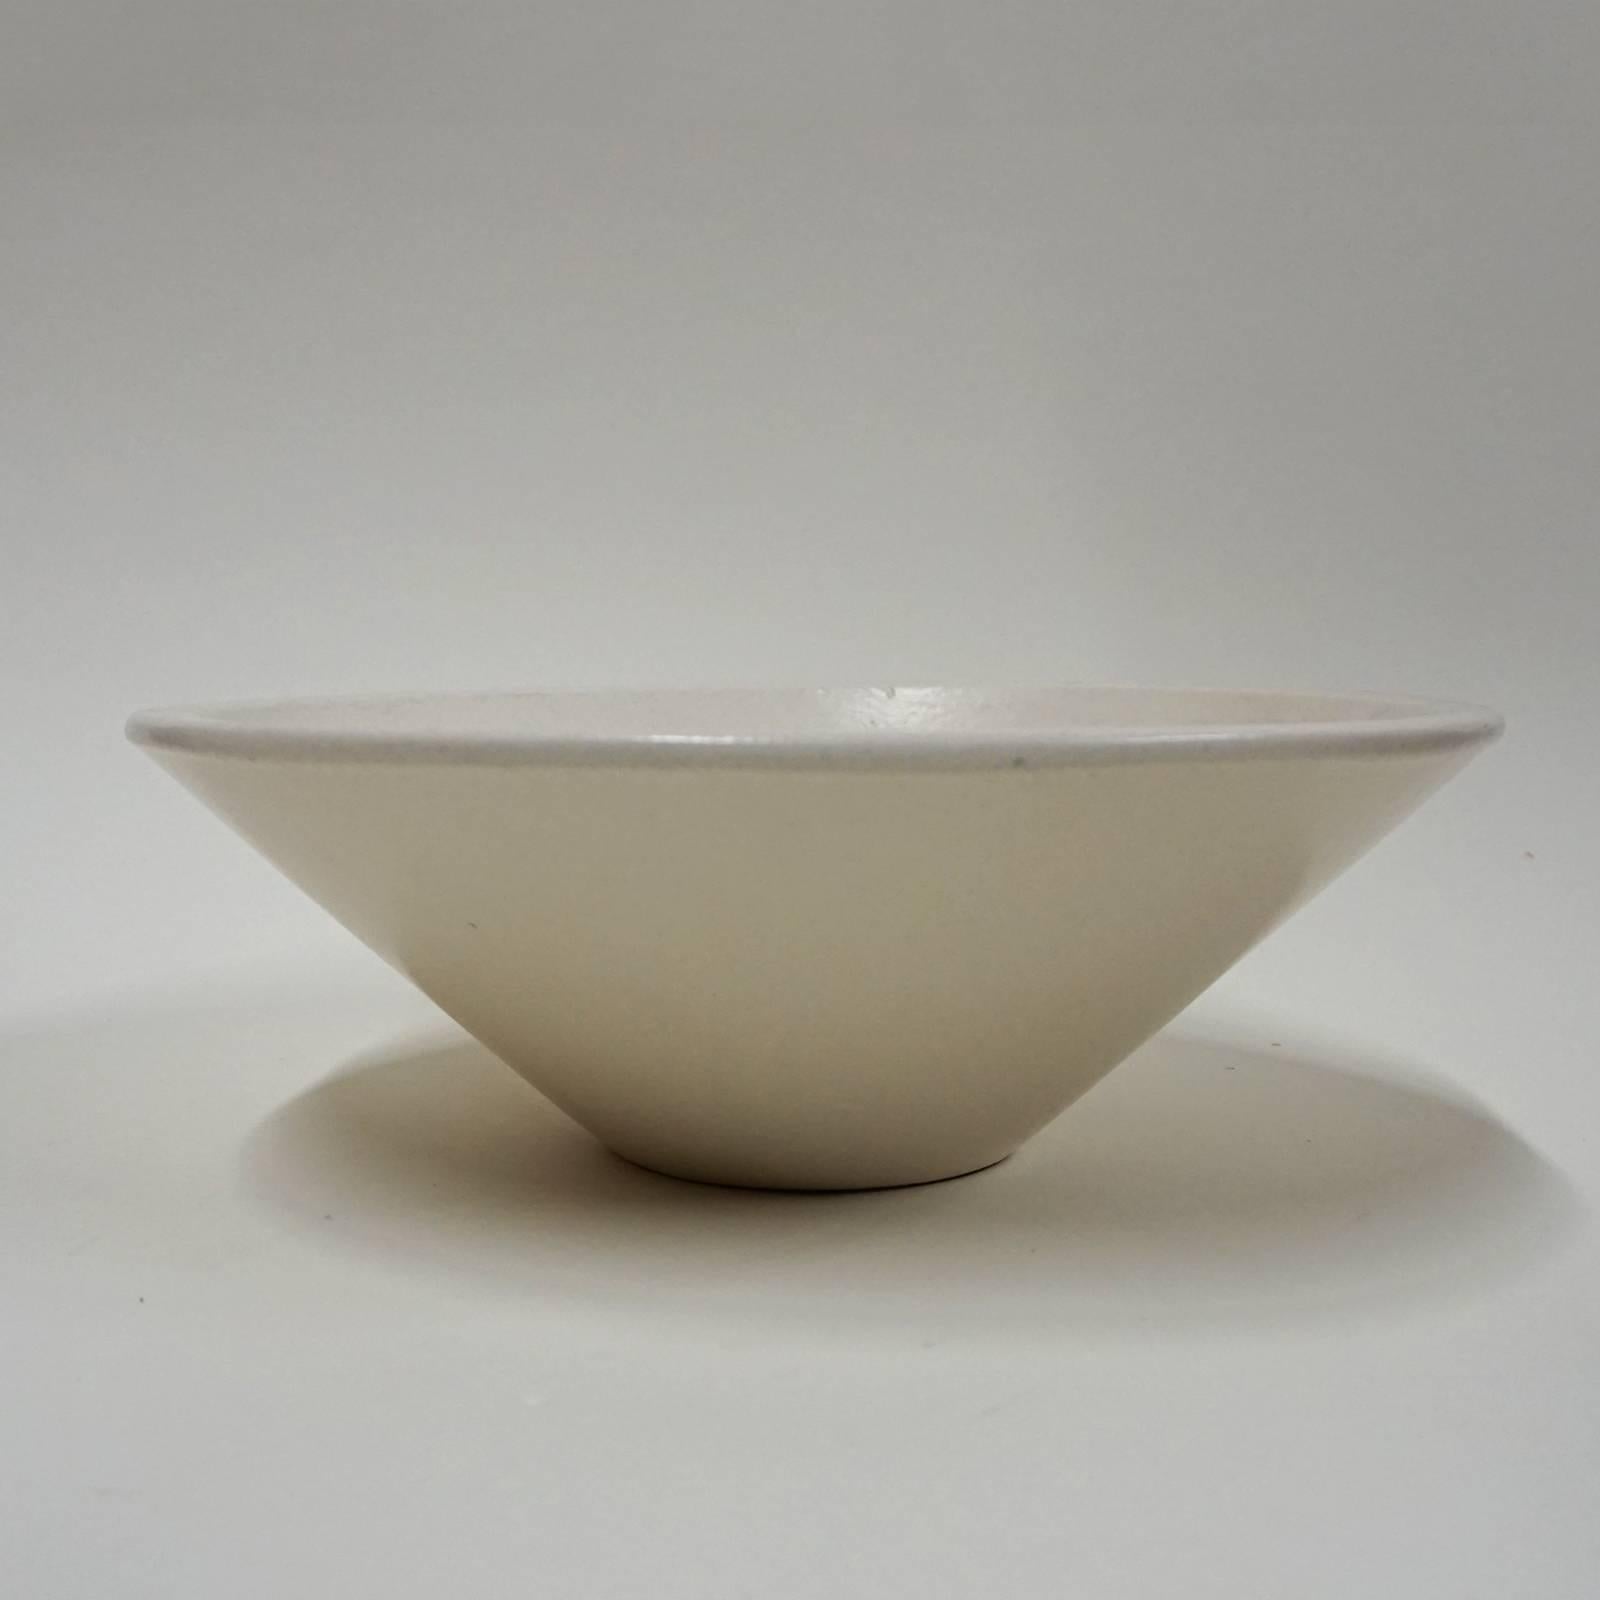 Small planter or bowl by La Gardo Tackett for architectural pottery (Model SC-01). Glazed in white, 1950s.